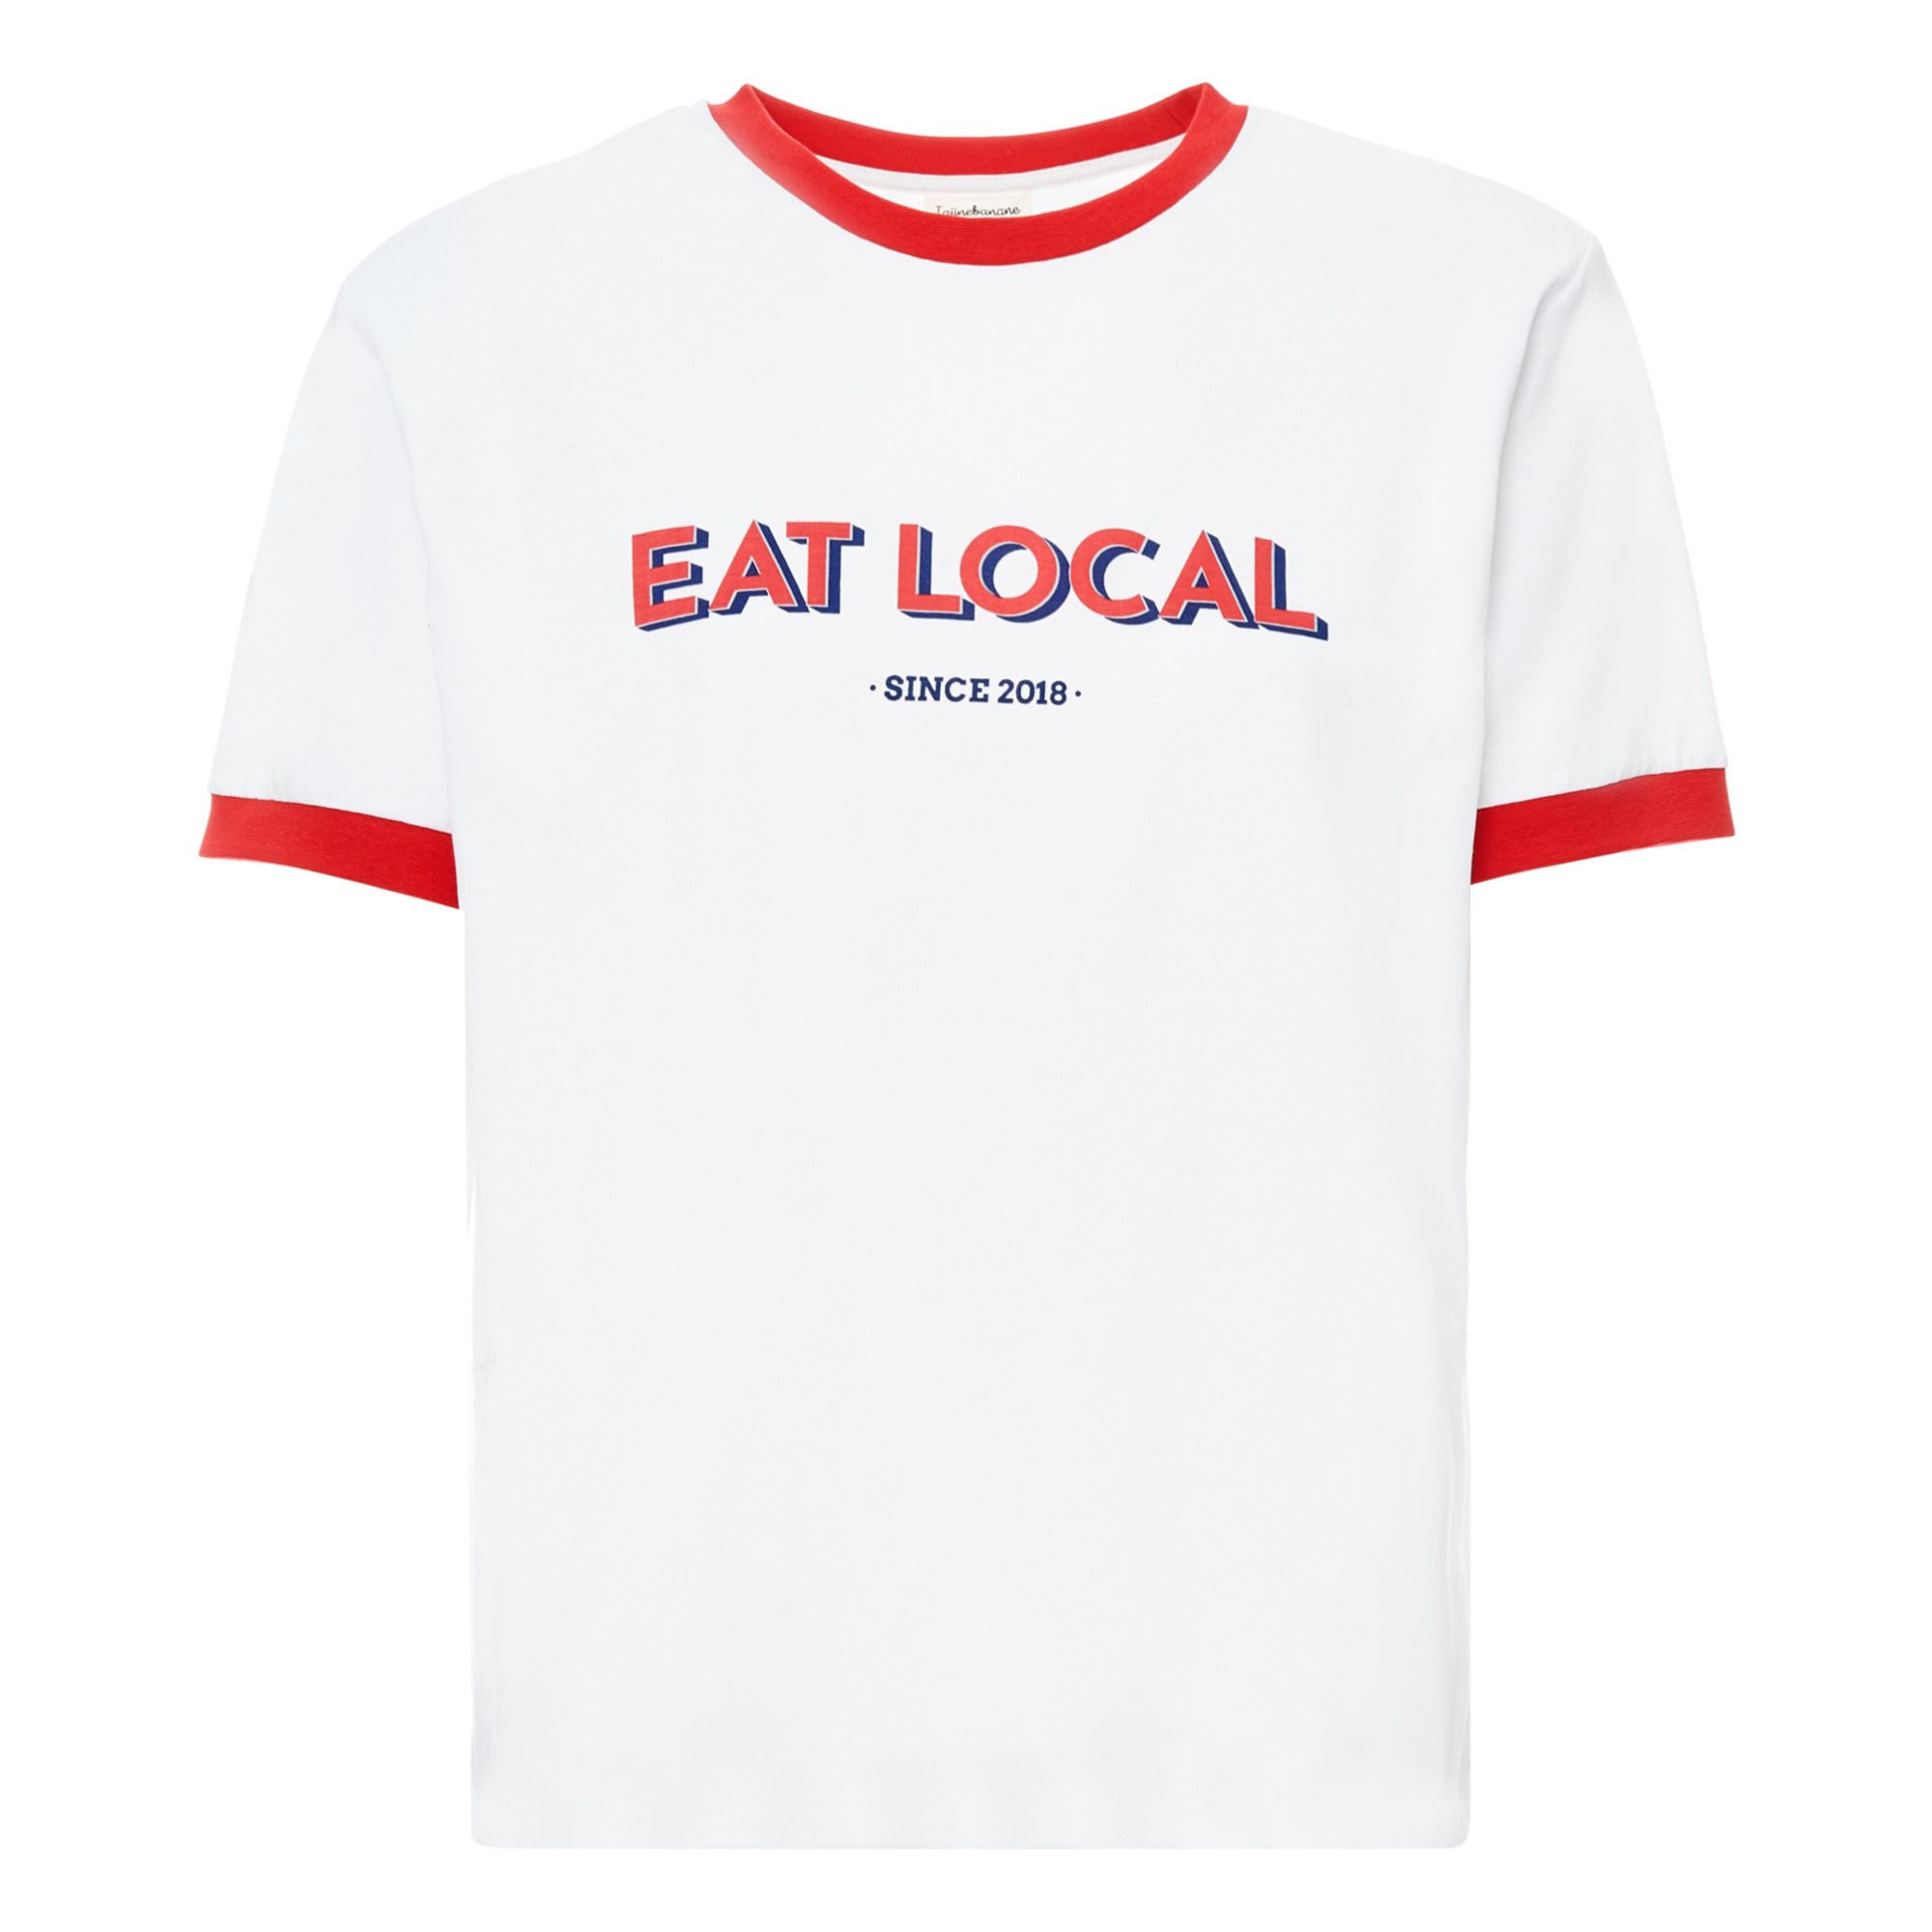 Tajinebanane - T-Shirt d'allaitement Eat local - Femme - Blanc